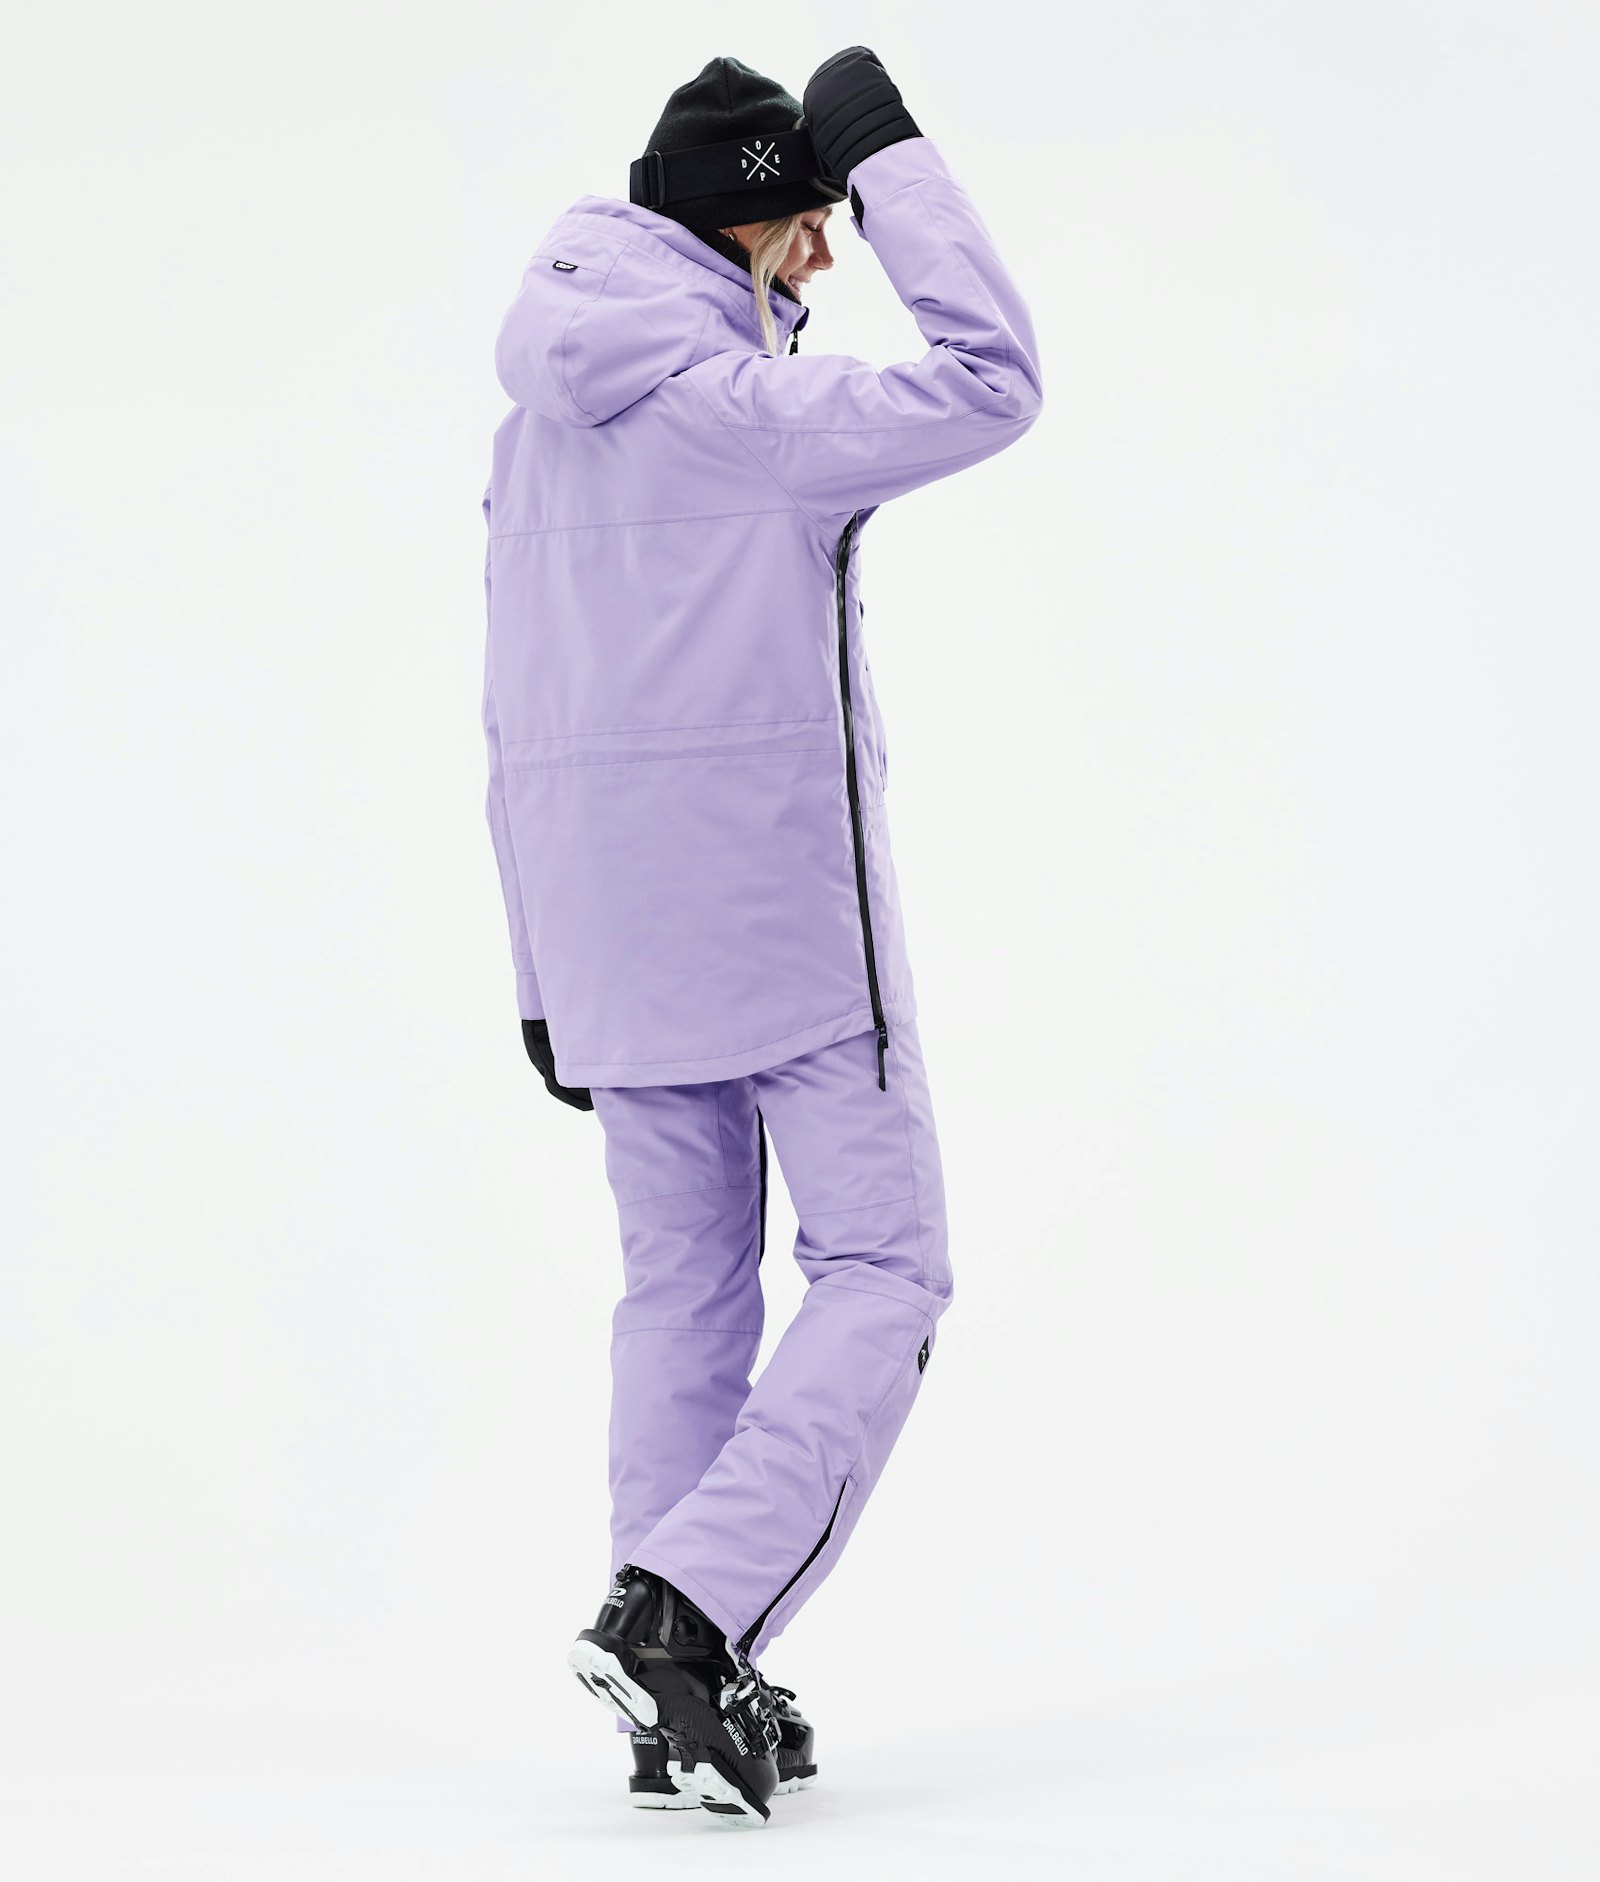 Akin W 2021 Veste de Ski Femme Faded Violet